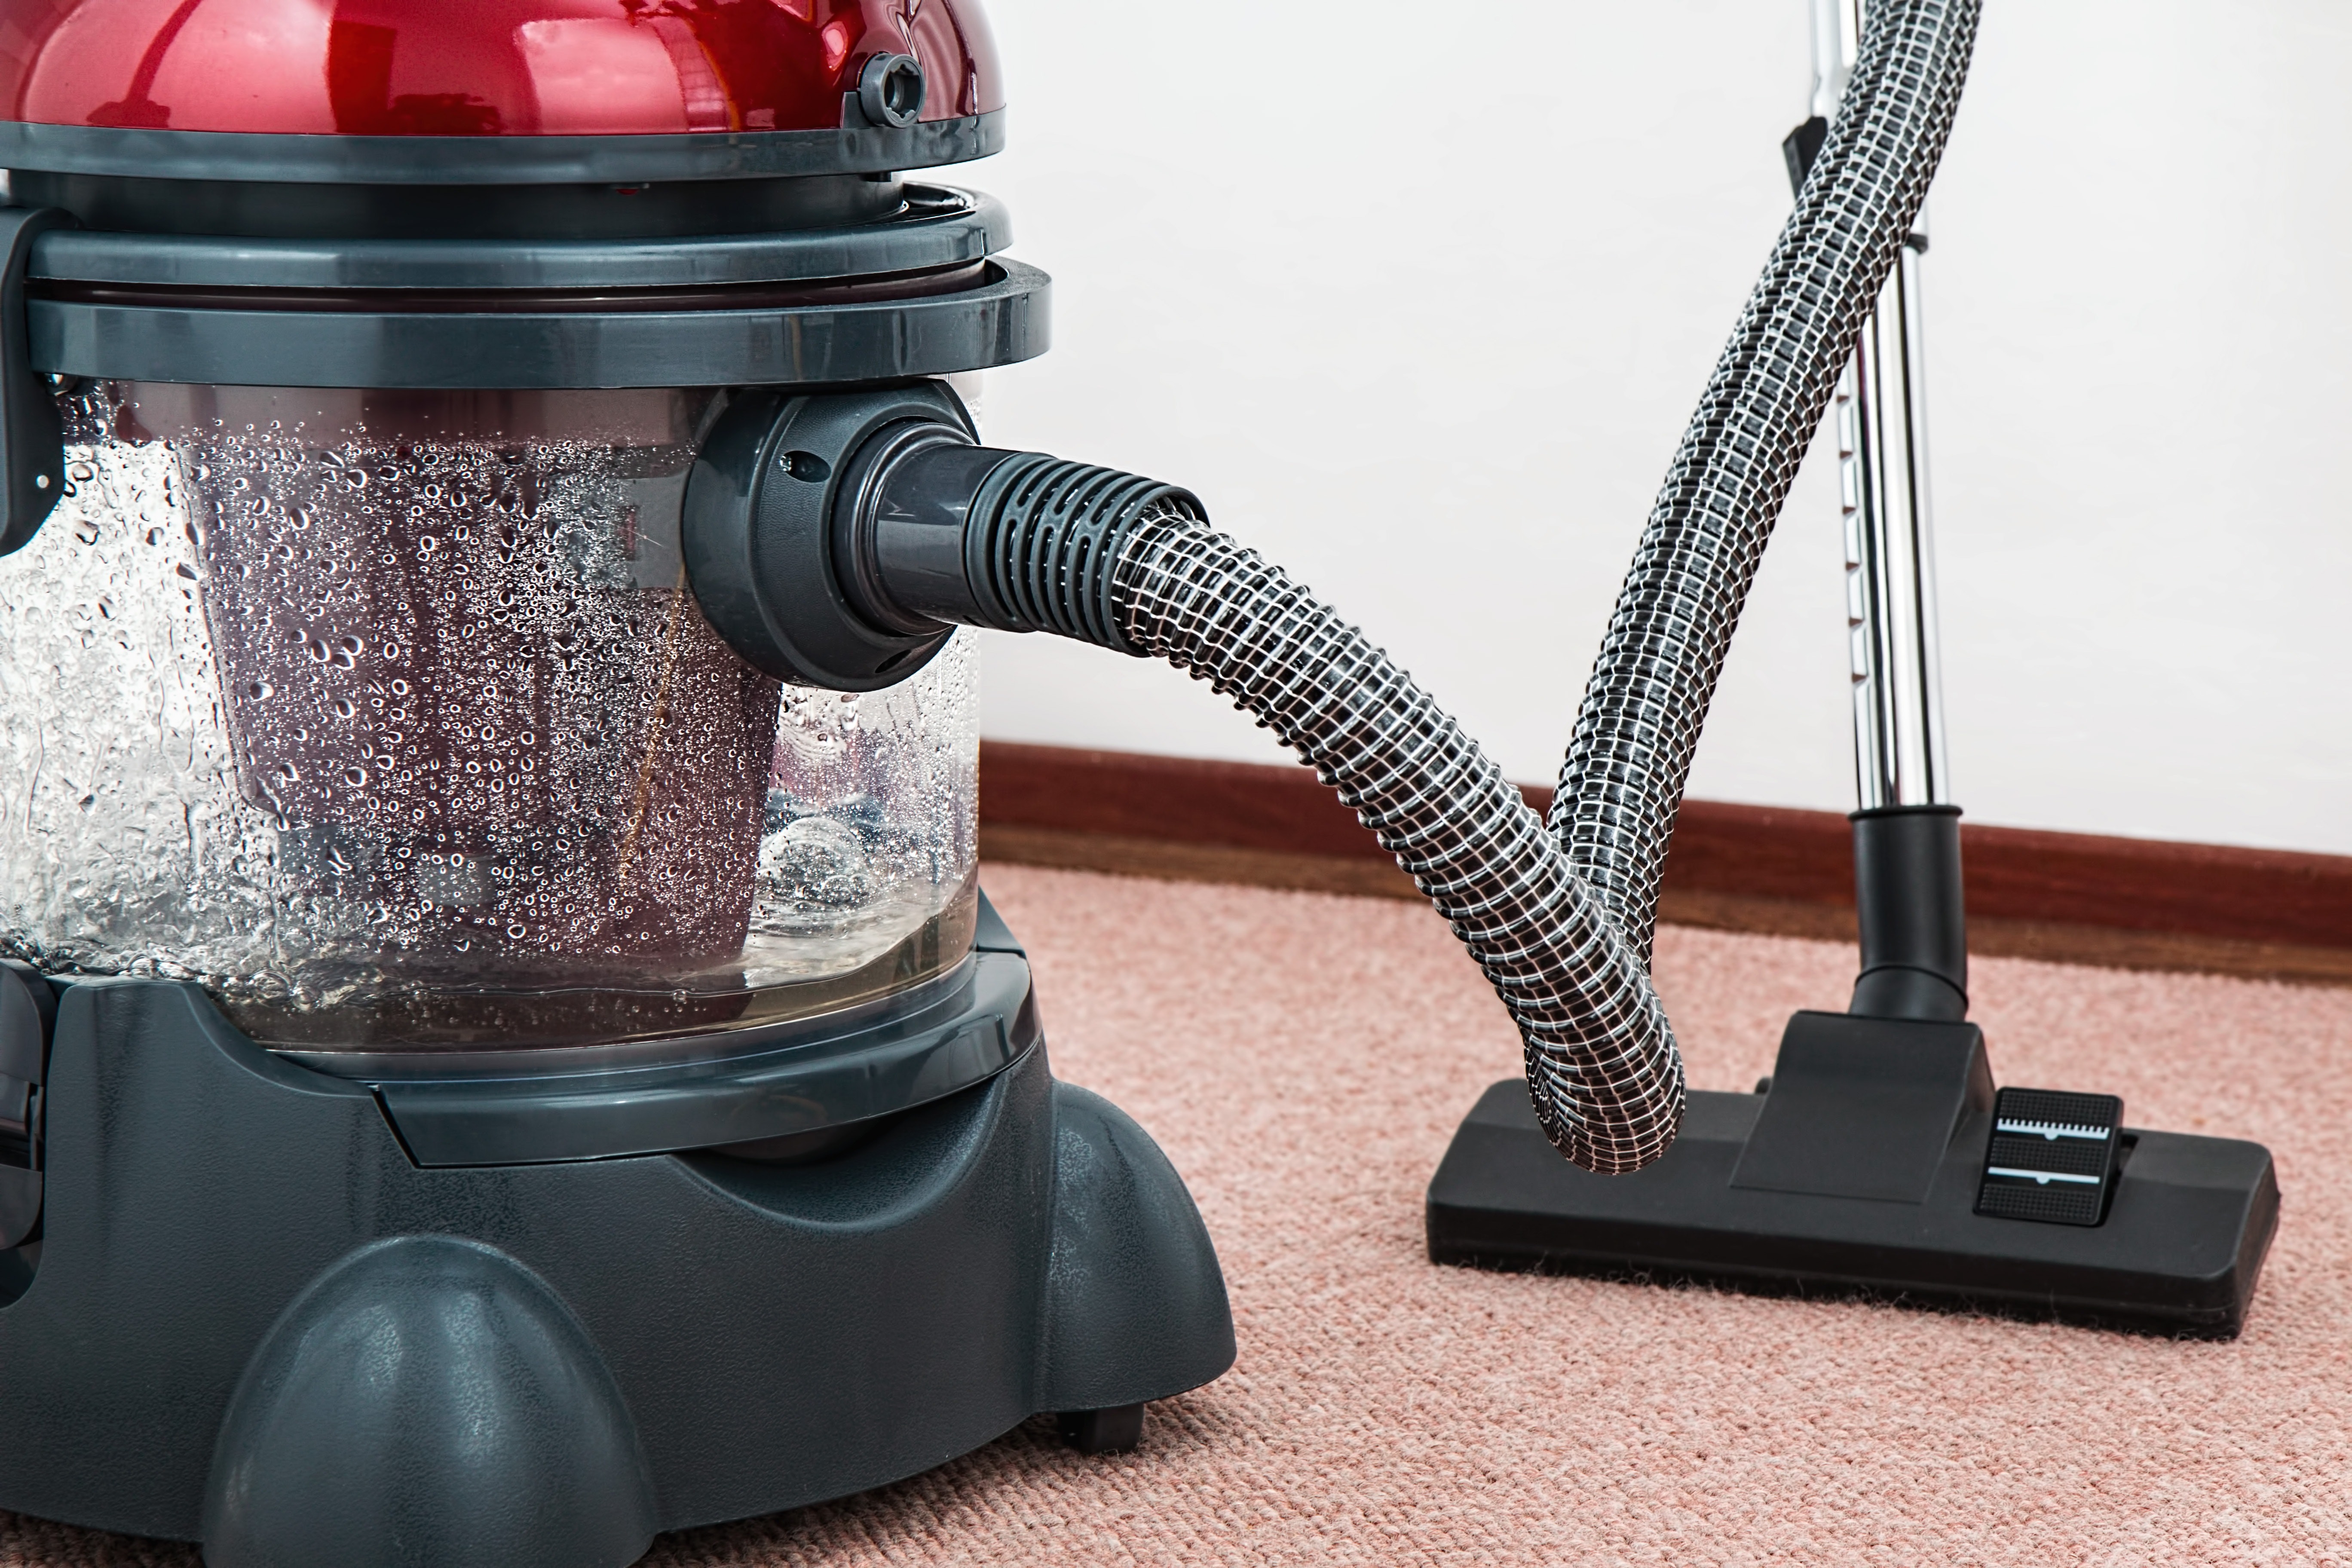 appliance-carpet-chores-38325